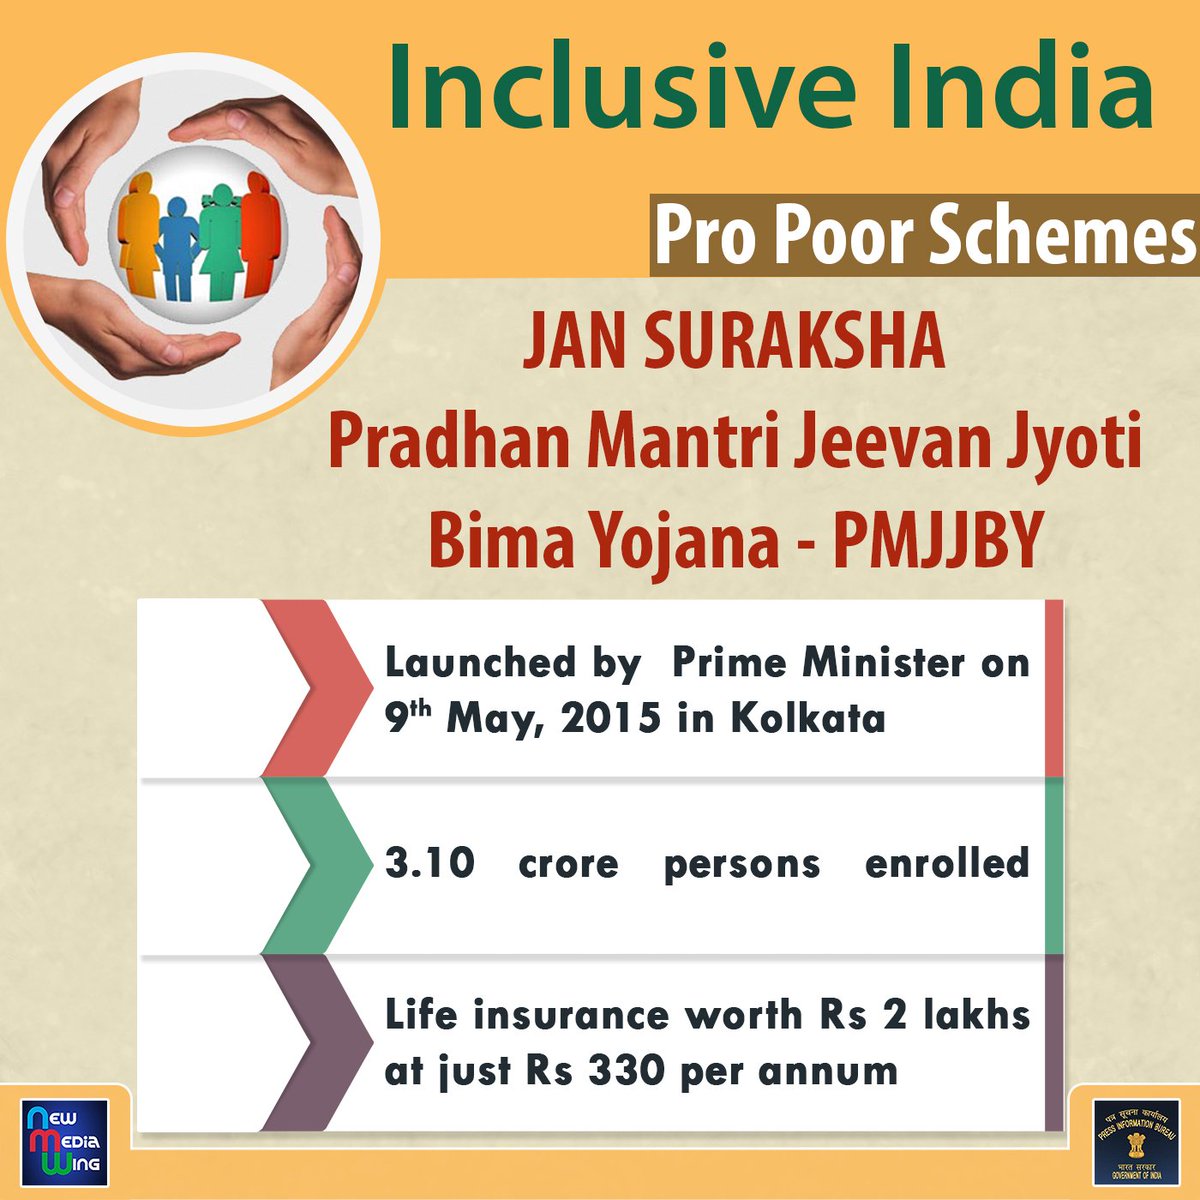 Towards an #InclusiveIndia.
Check out Govt's #KeyInitiatives towards poverty alleviation 
Pradhan Mantri #JeevanJyotiBimaYojana 5/n